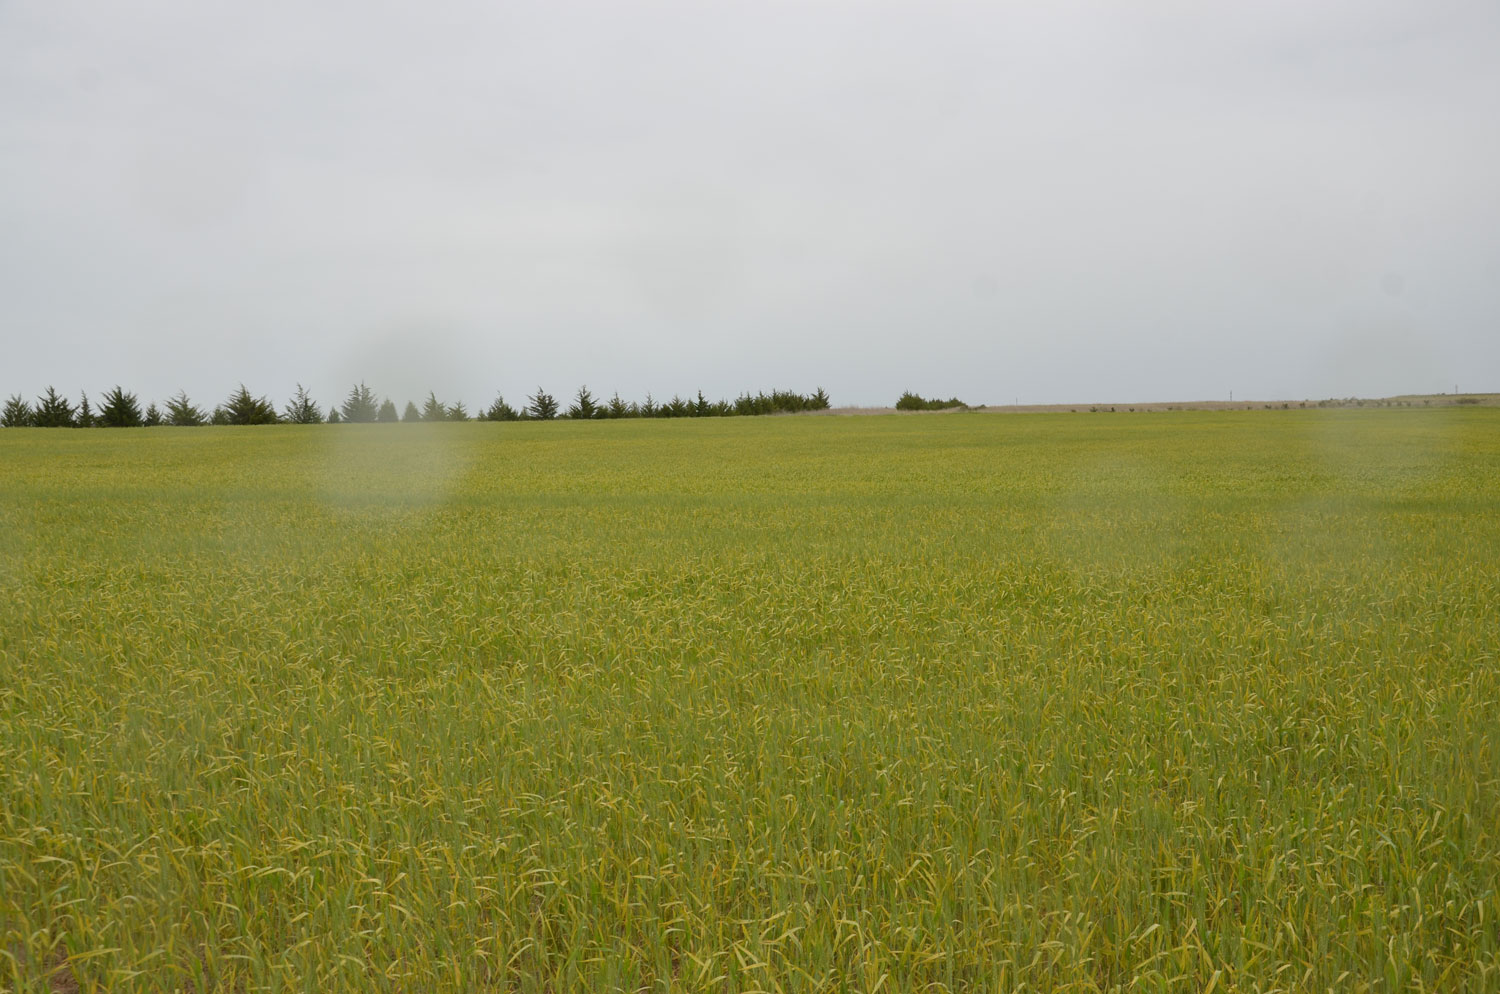 Stripe rust causing field of wheat to yellow